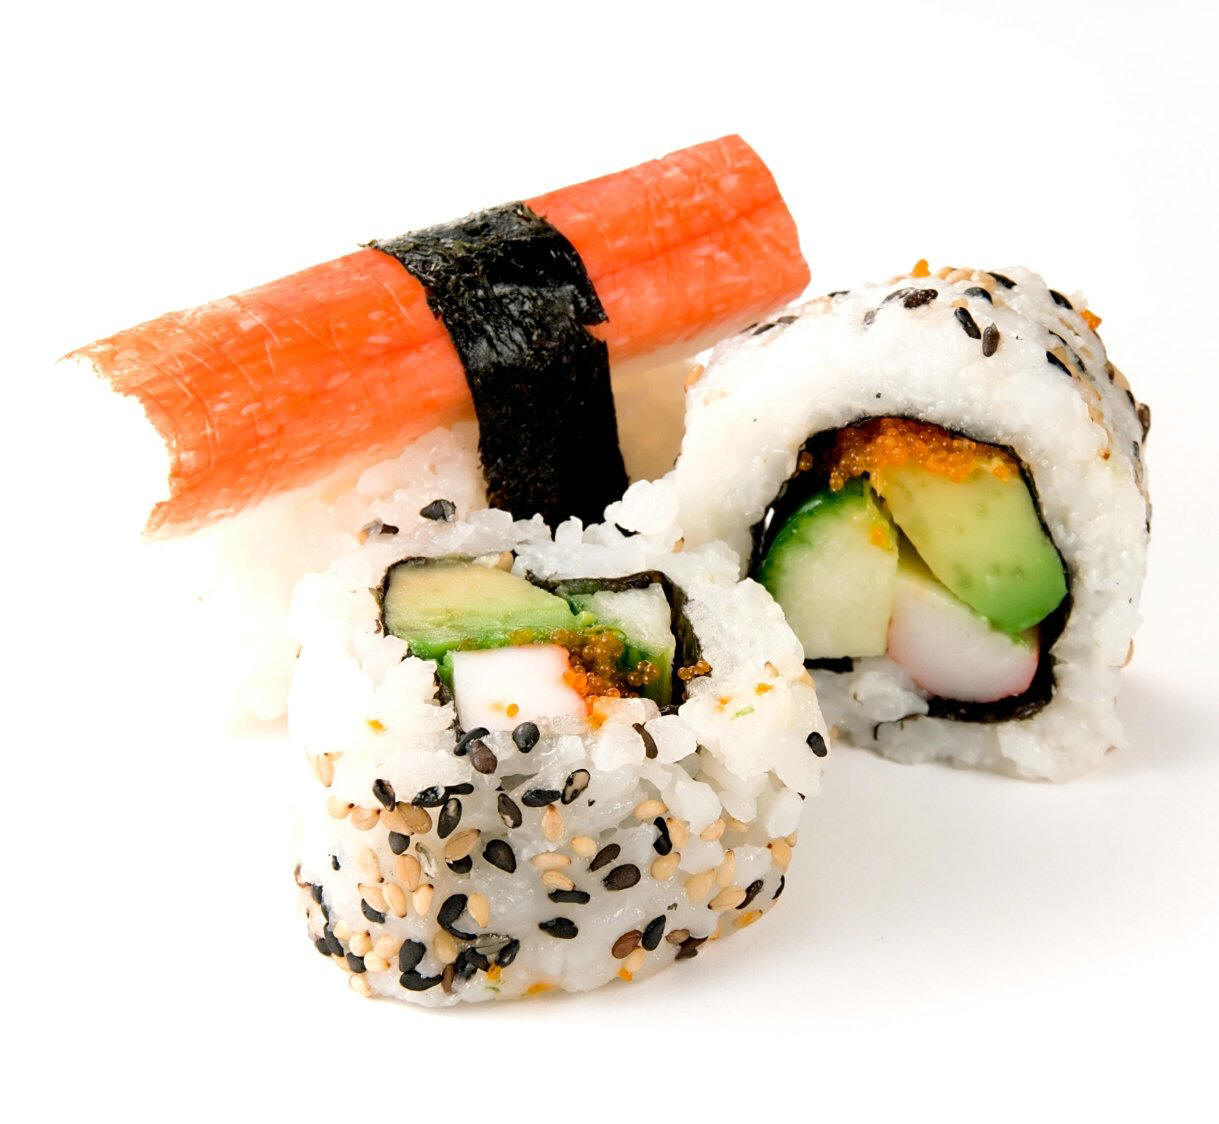 Good ads = good sushi